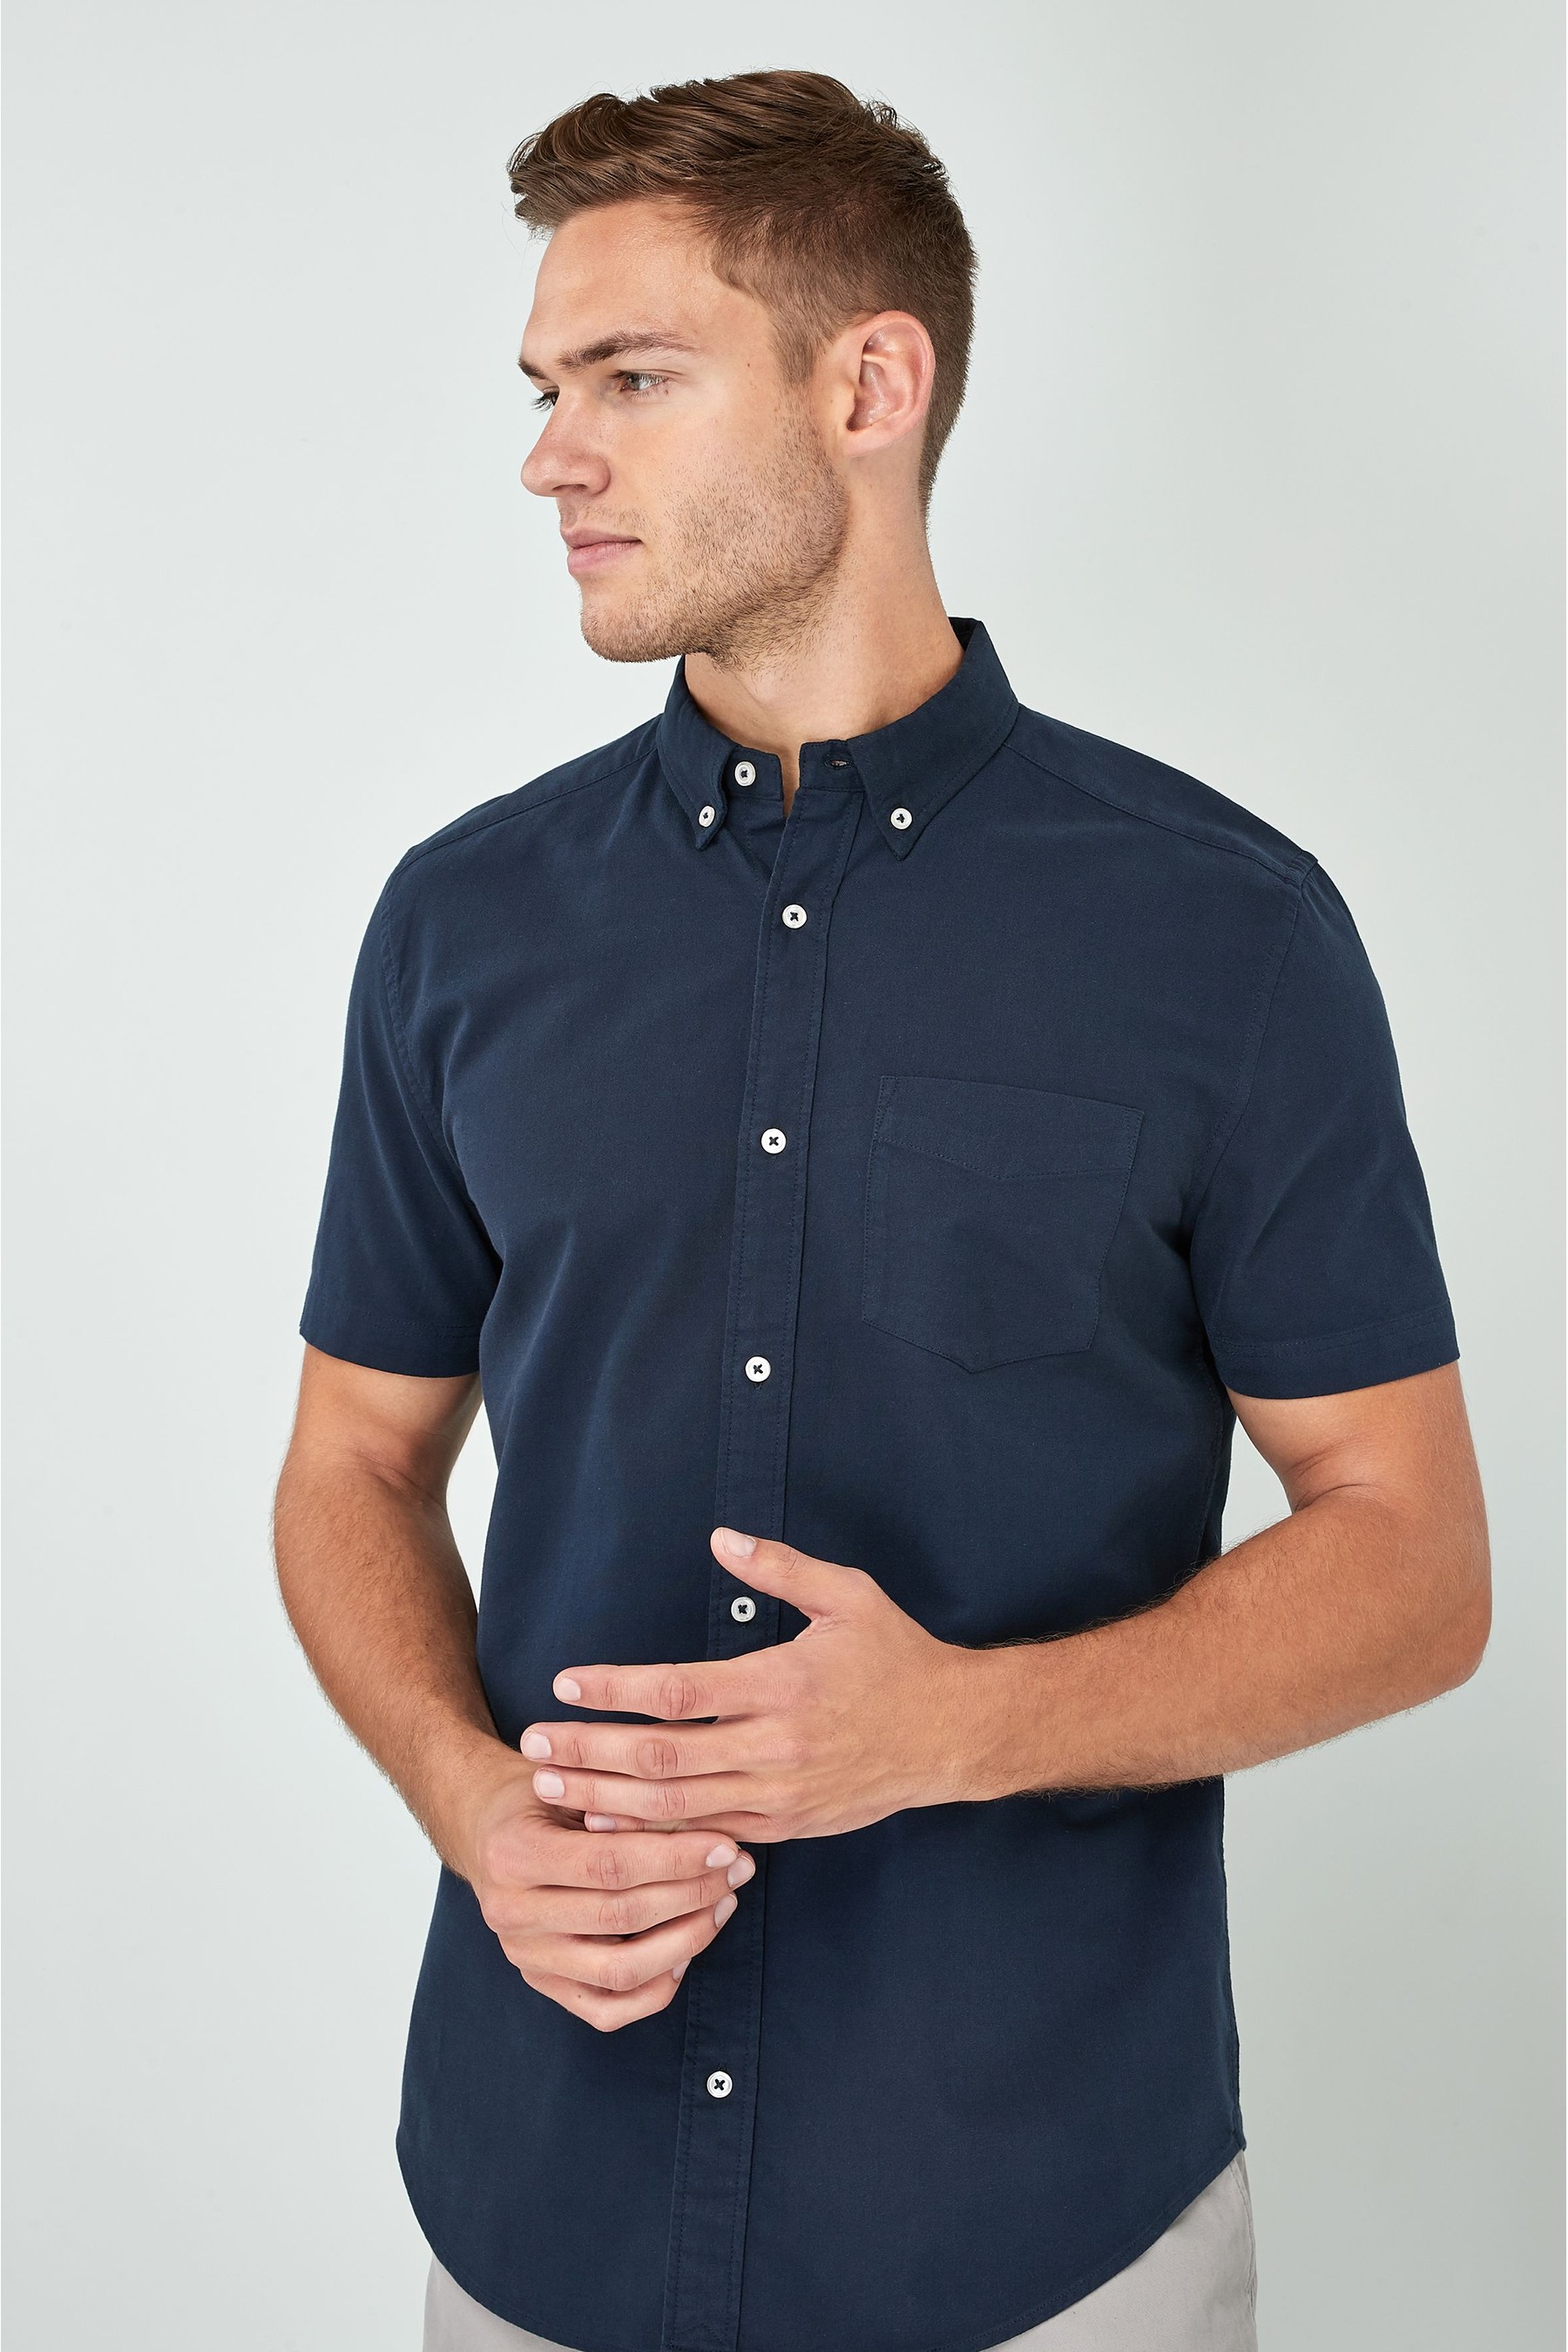 Buy Navy Regular Fit Short Sleeve Oxford Shirt from the Next UK online shop